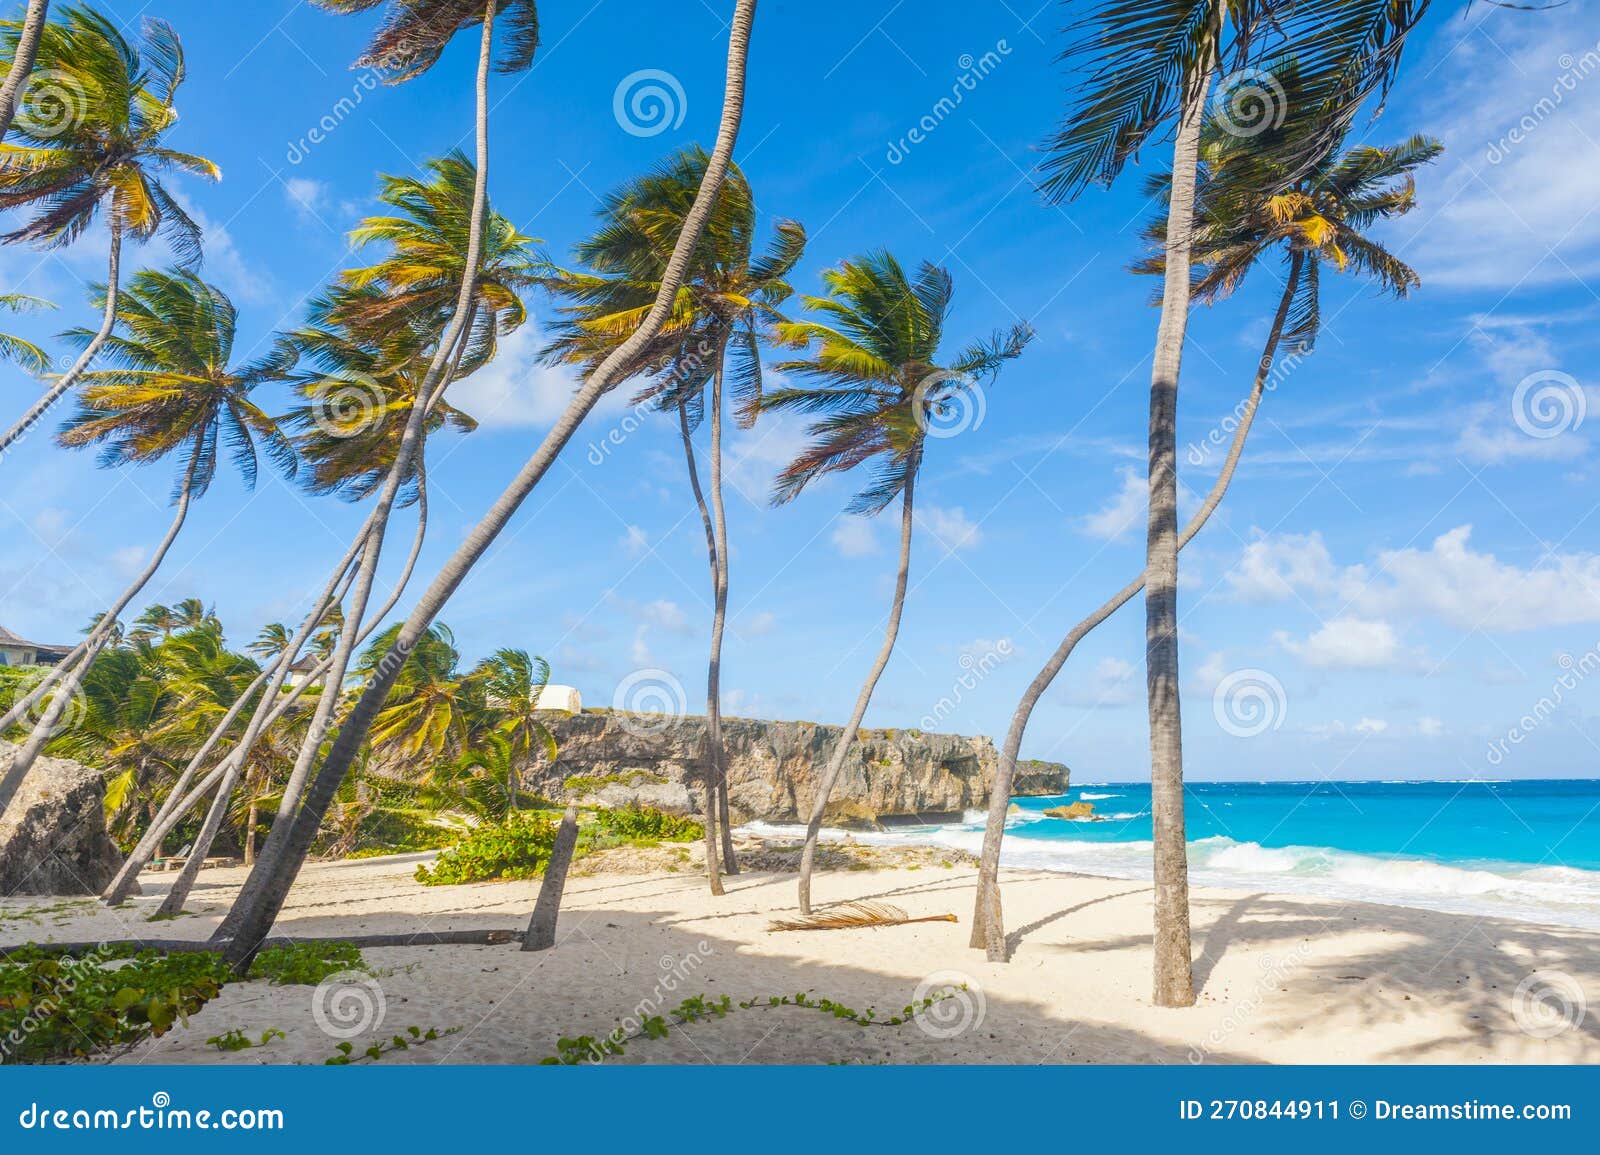 Bottom Bay Beach In Barbados Stock Image Image Of Paradise Scenic